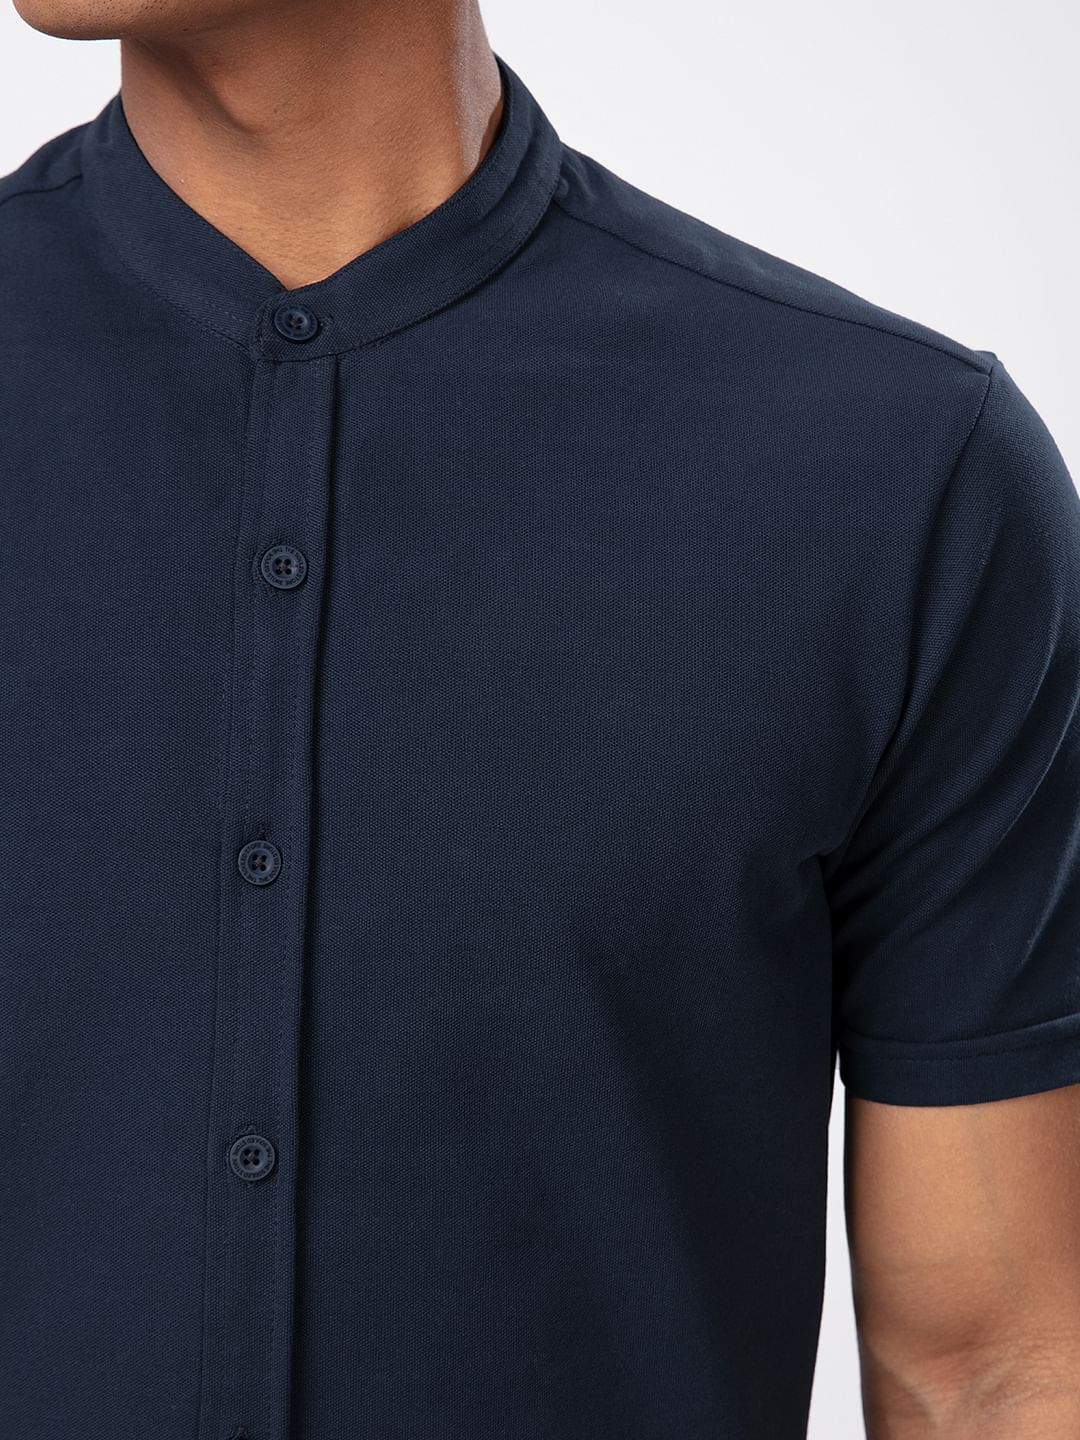 Solids Mandarin Knit Shirt: Navy Blue